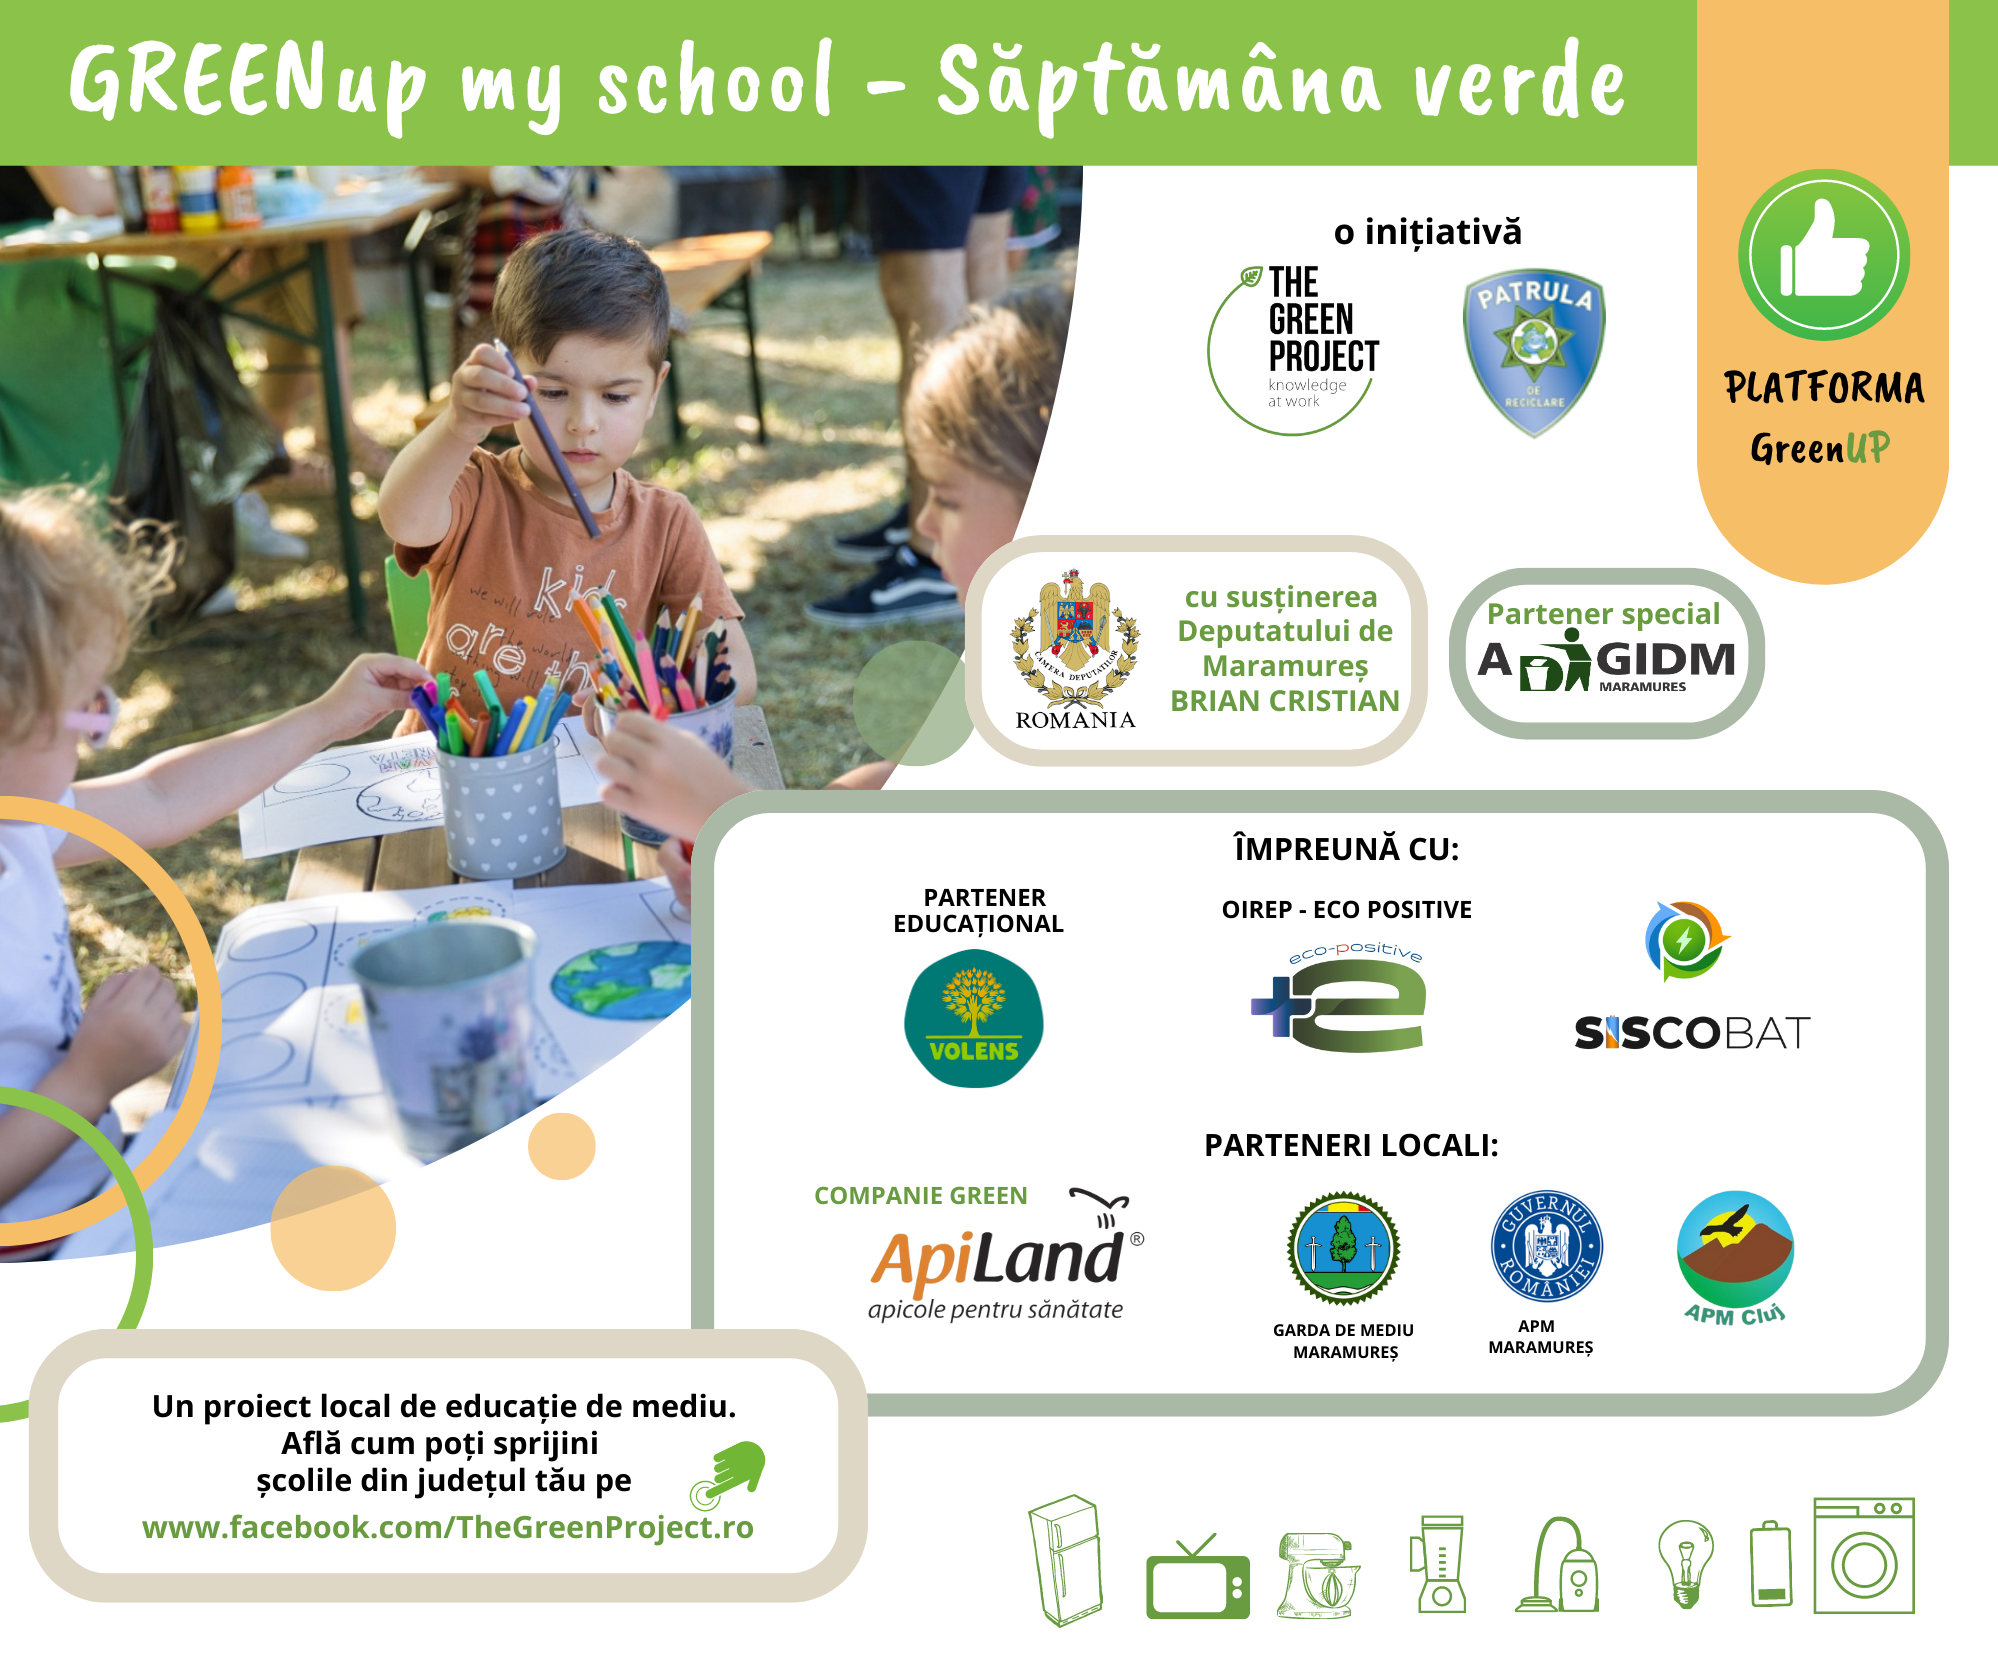 GreenUp my school - proiect de educatie de mediu in Saptamana Verde The Green Project impreuna cu Asociatia Volens